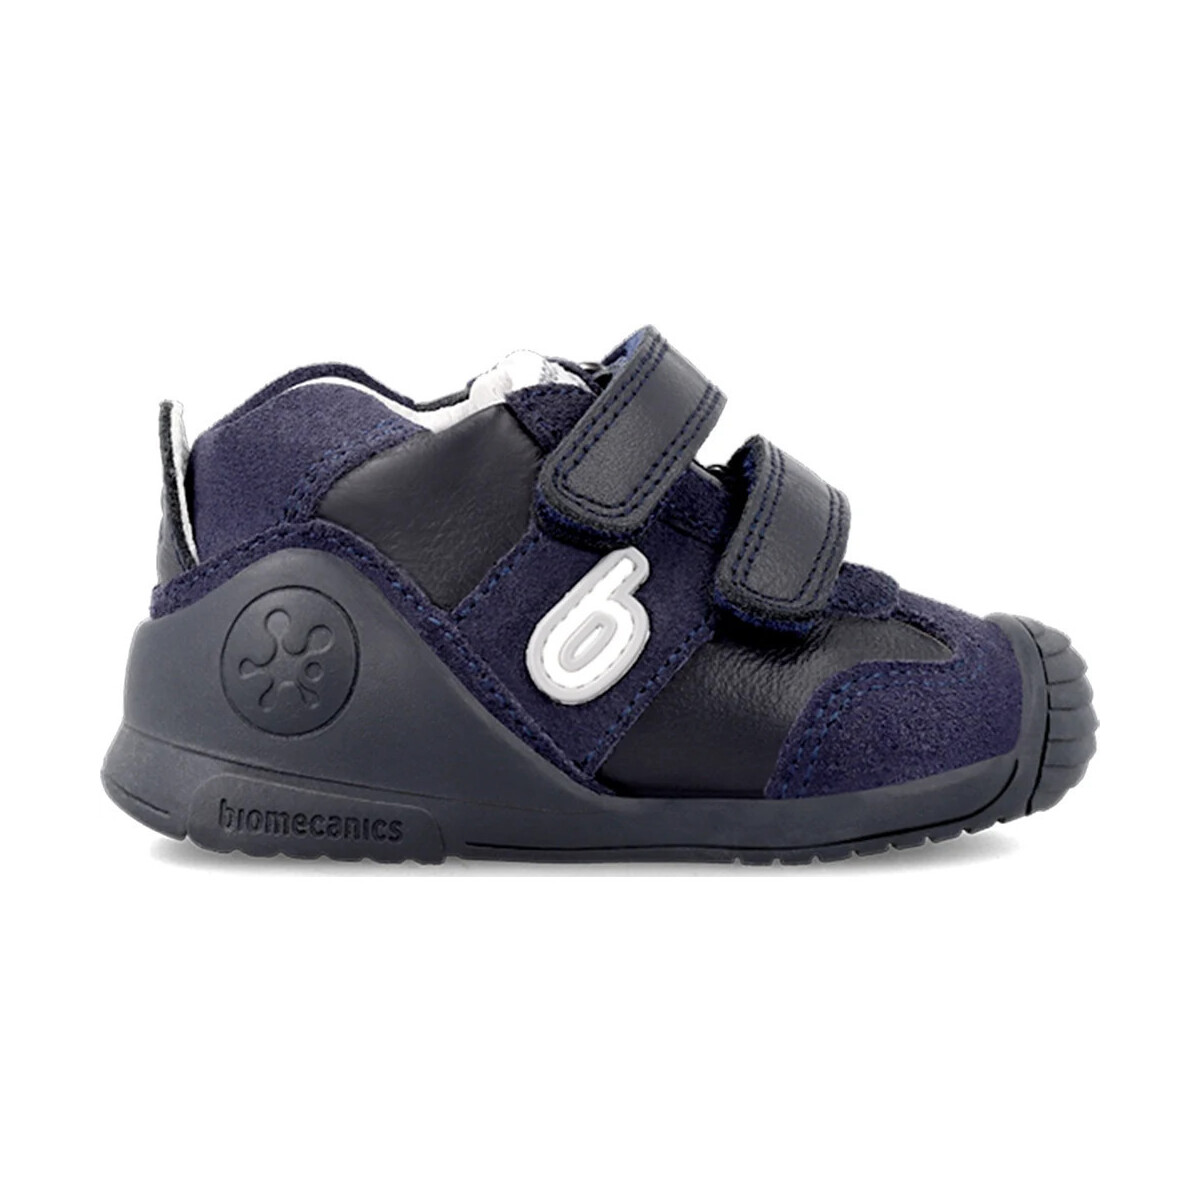 Schuhe Kinder Sneaker Low Biomecanics SCHULSNEAKERS BIOMECHANICS 221002-A Blau